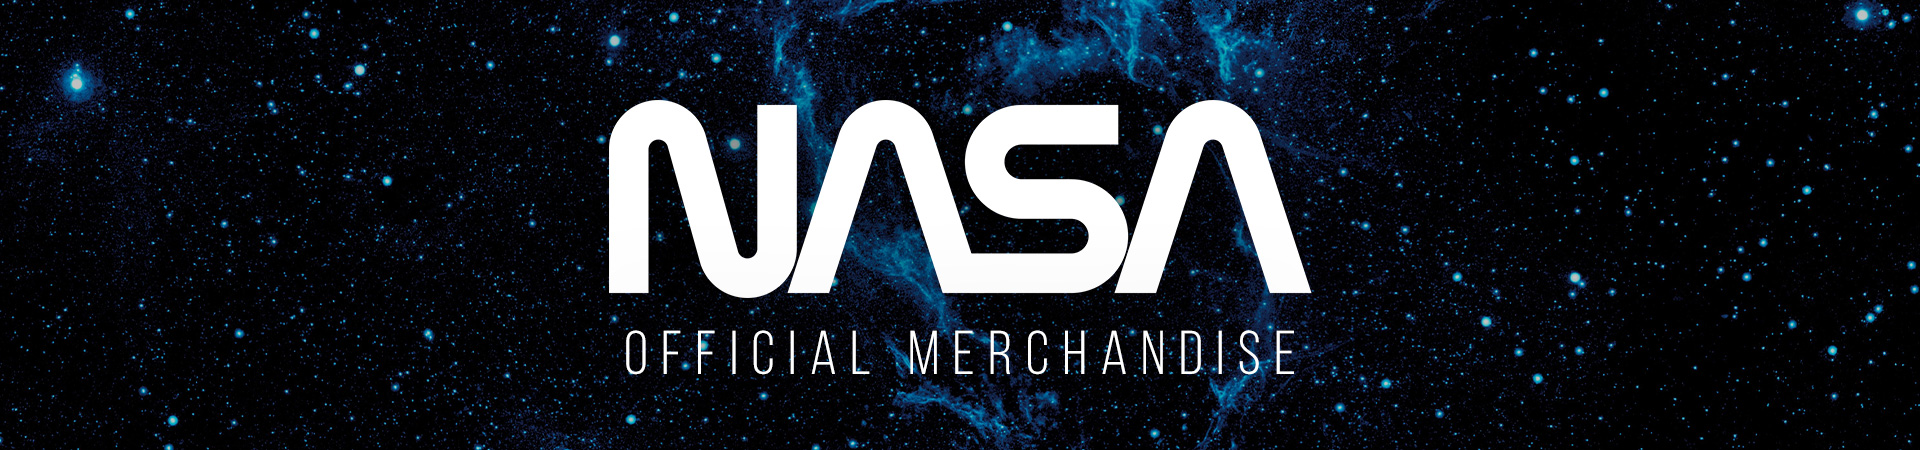 NASA Merchandise Page 